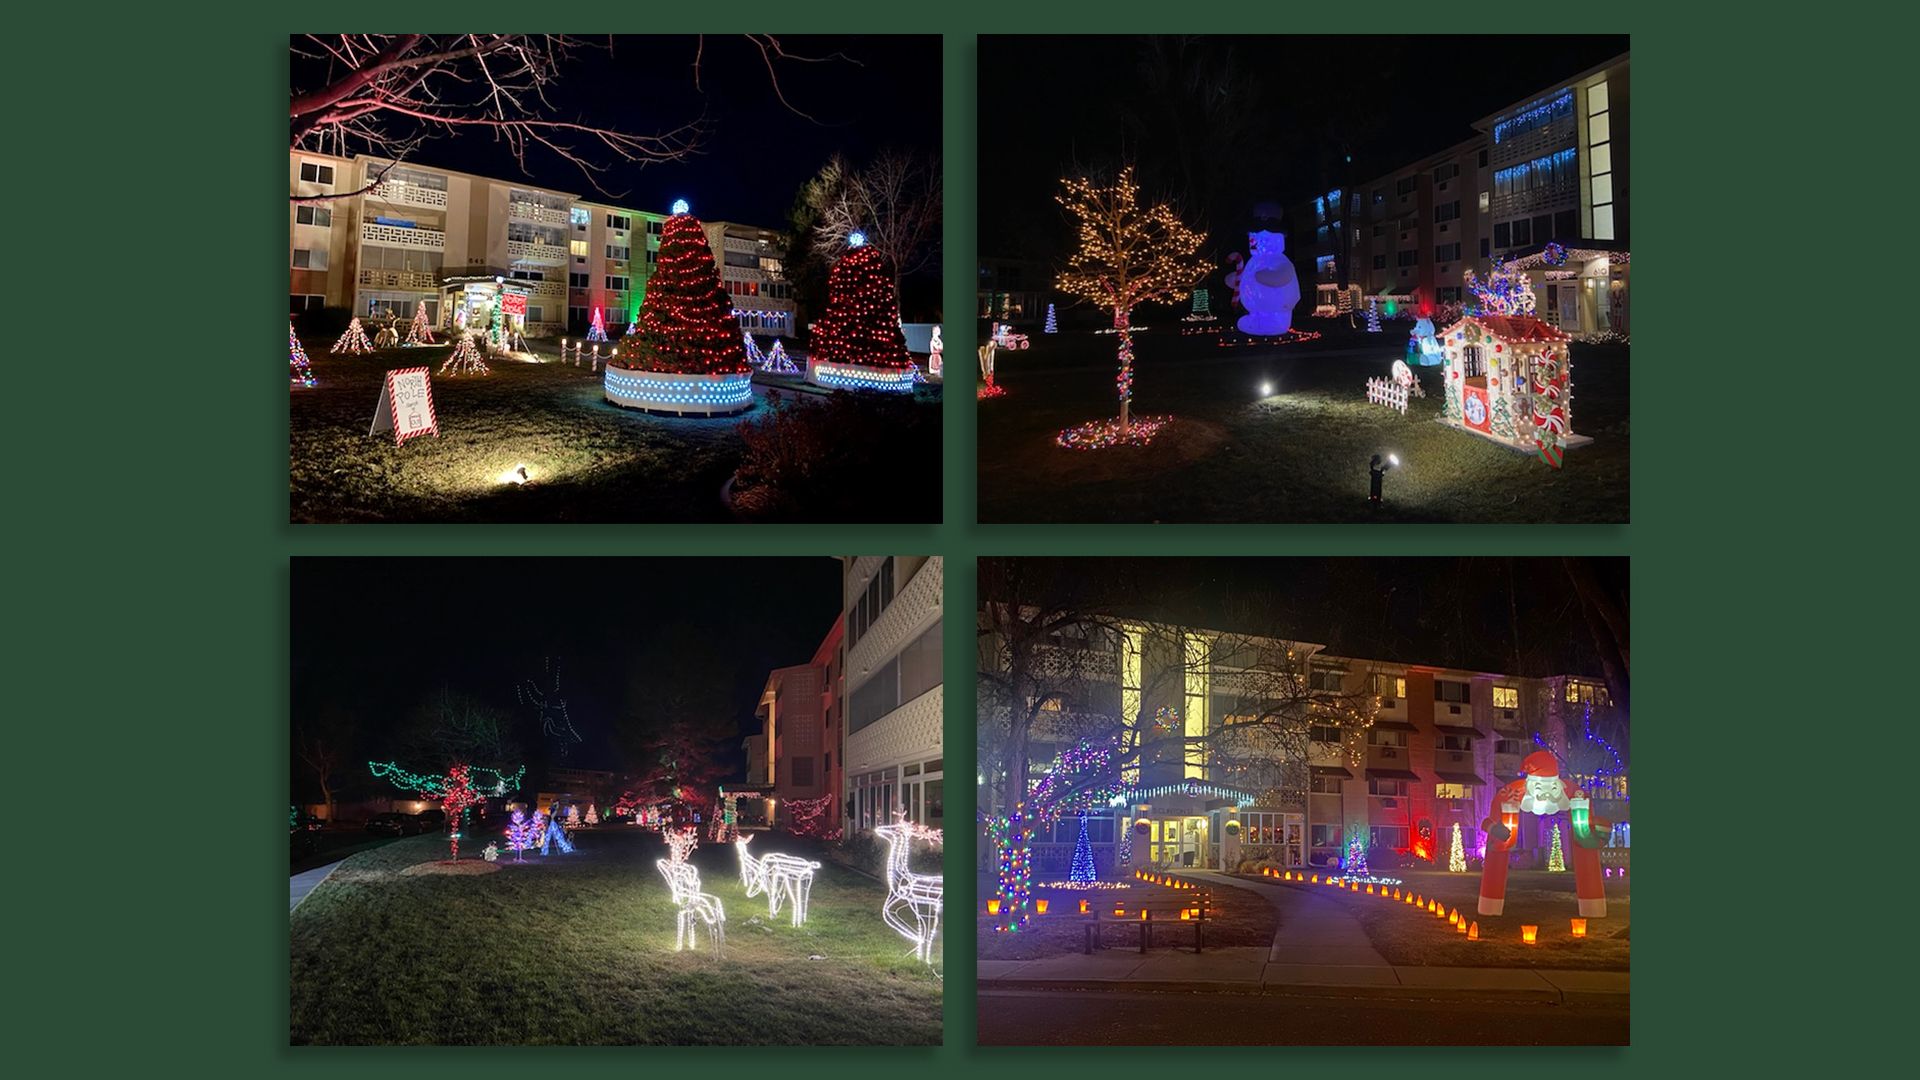 The Windsor Gardens neighborhood Denver Christmas lights